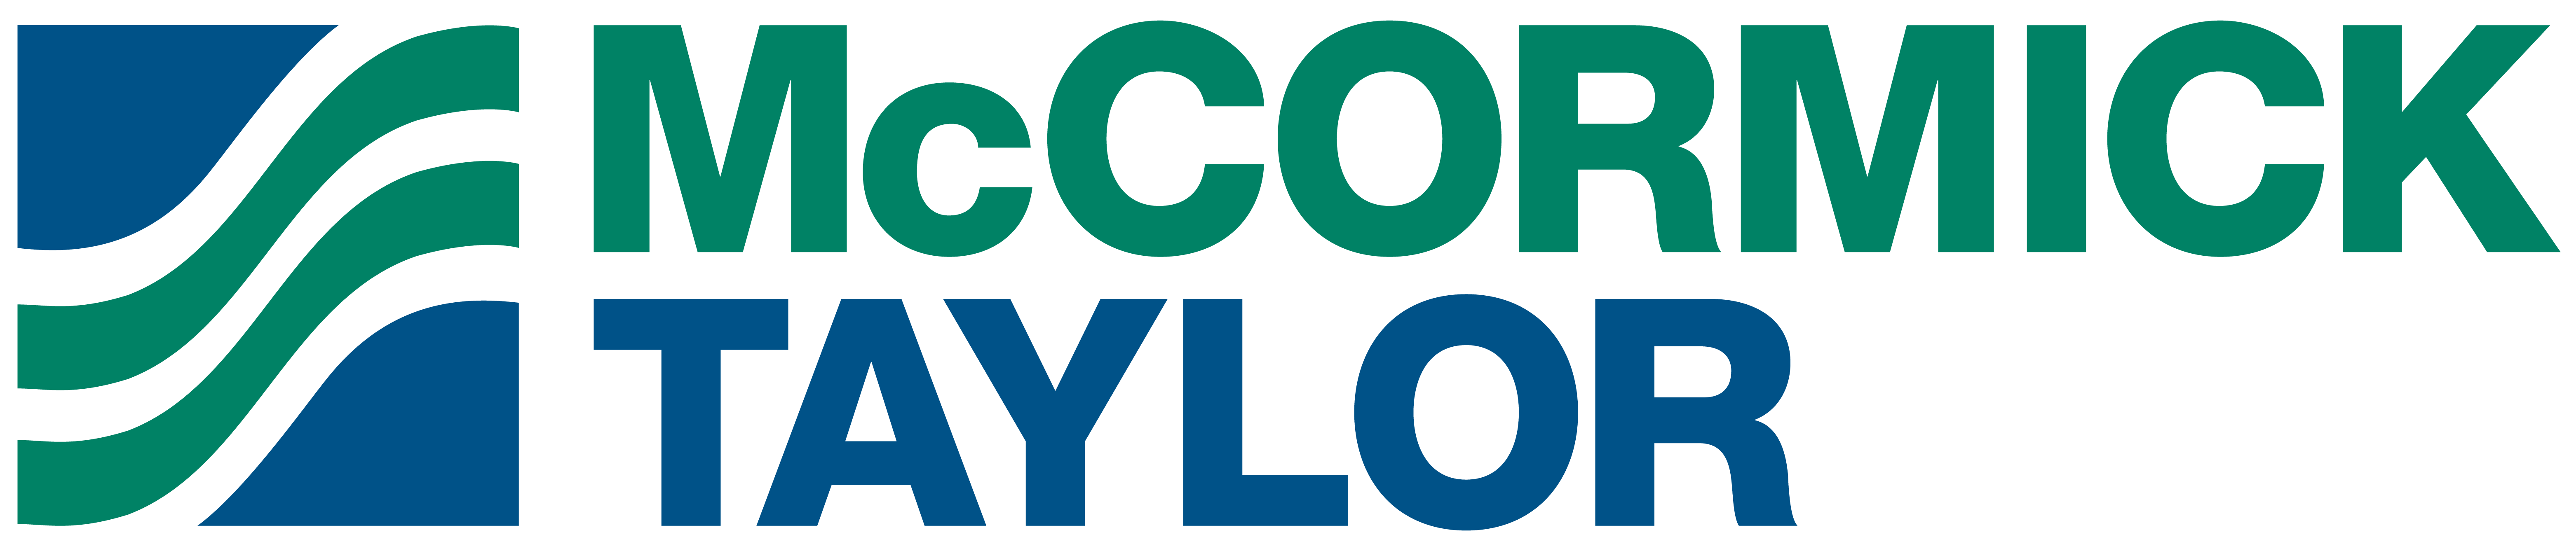 McCormick Taylor, Inc. Company Logo